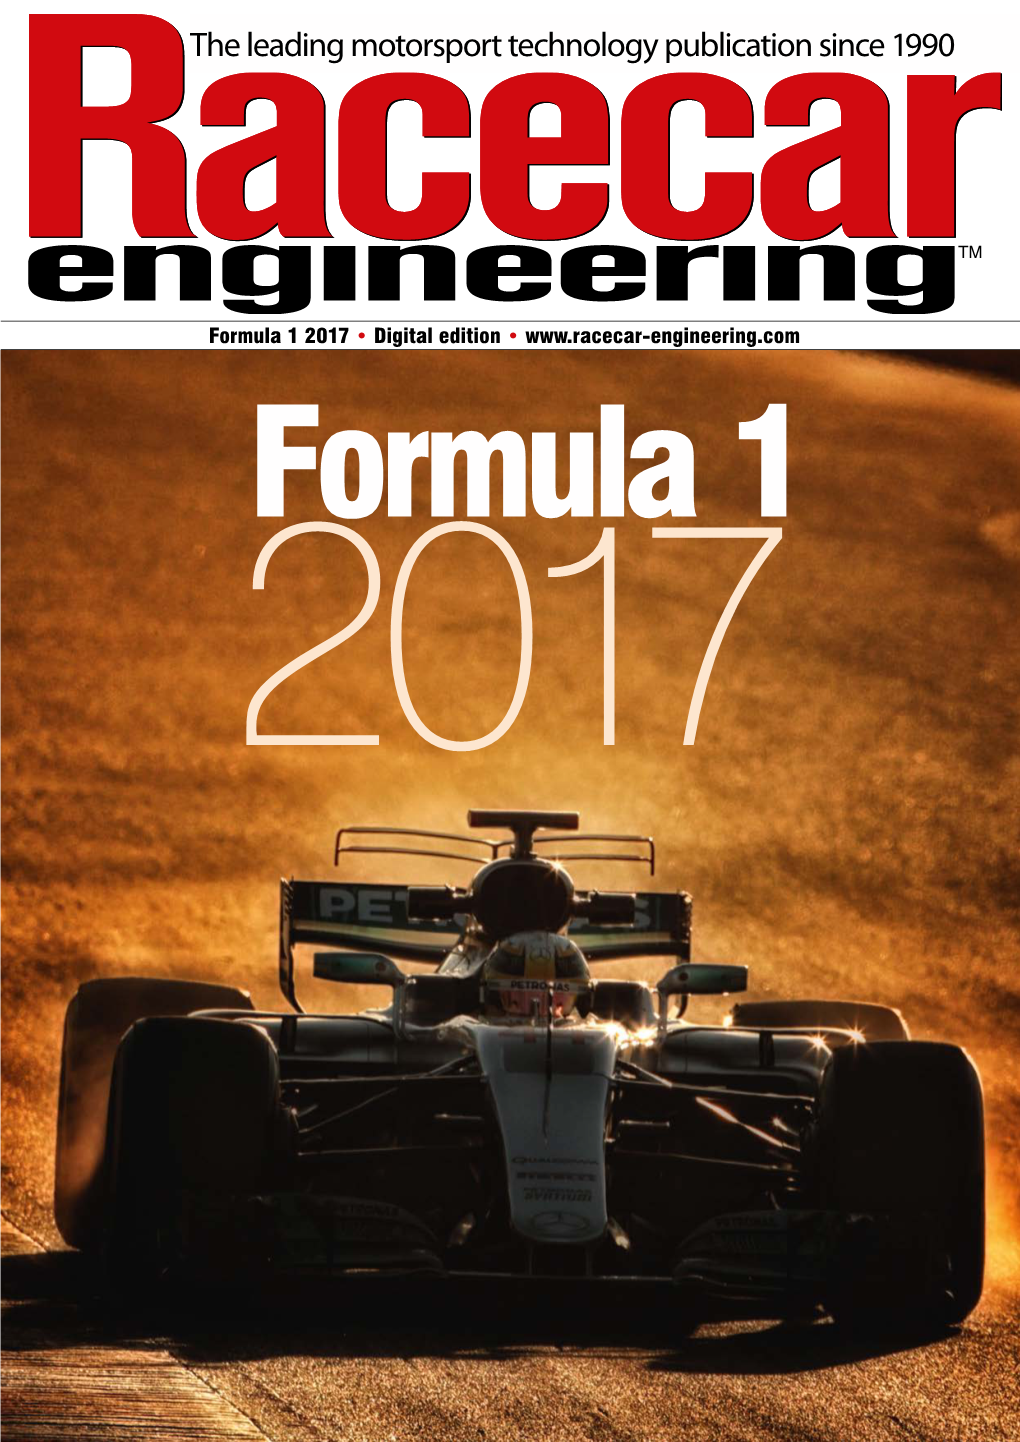 The Leading Motorsport Technology Publication Since 1990